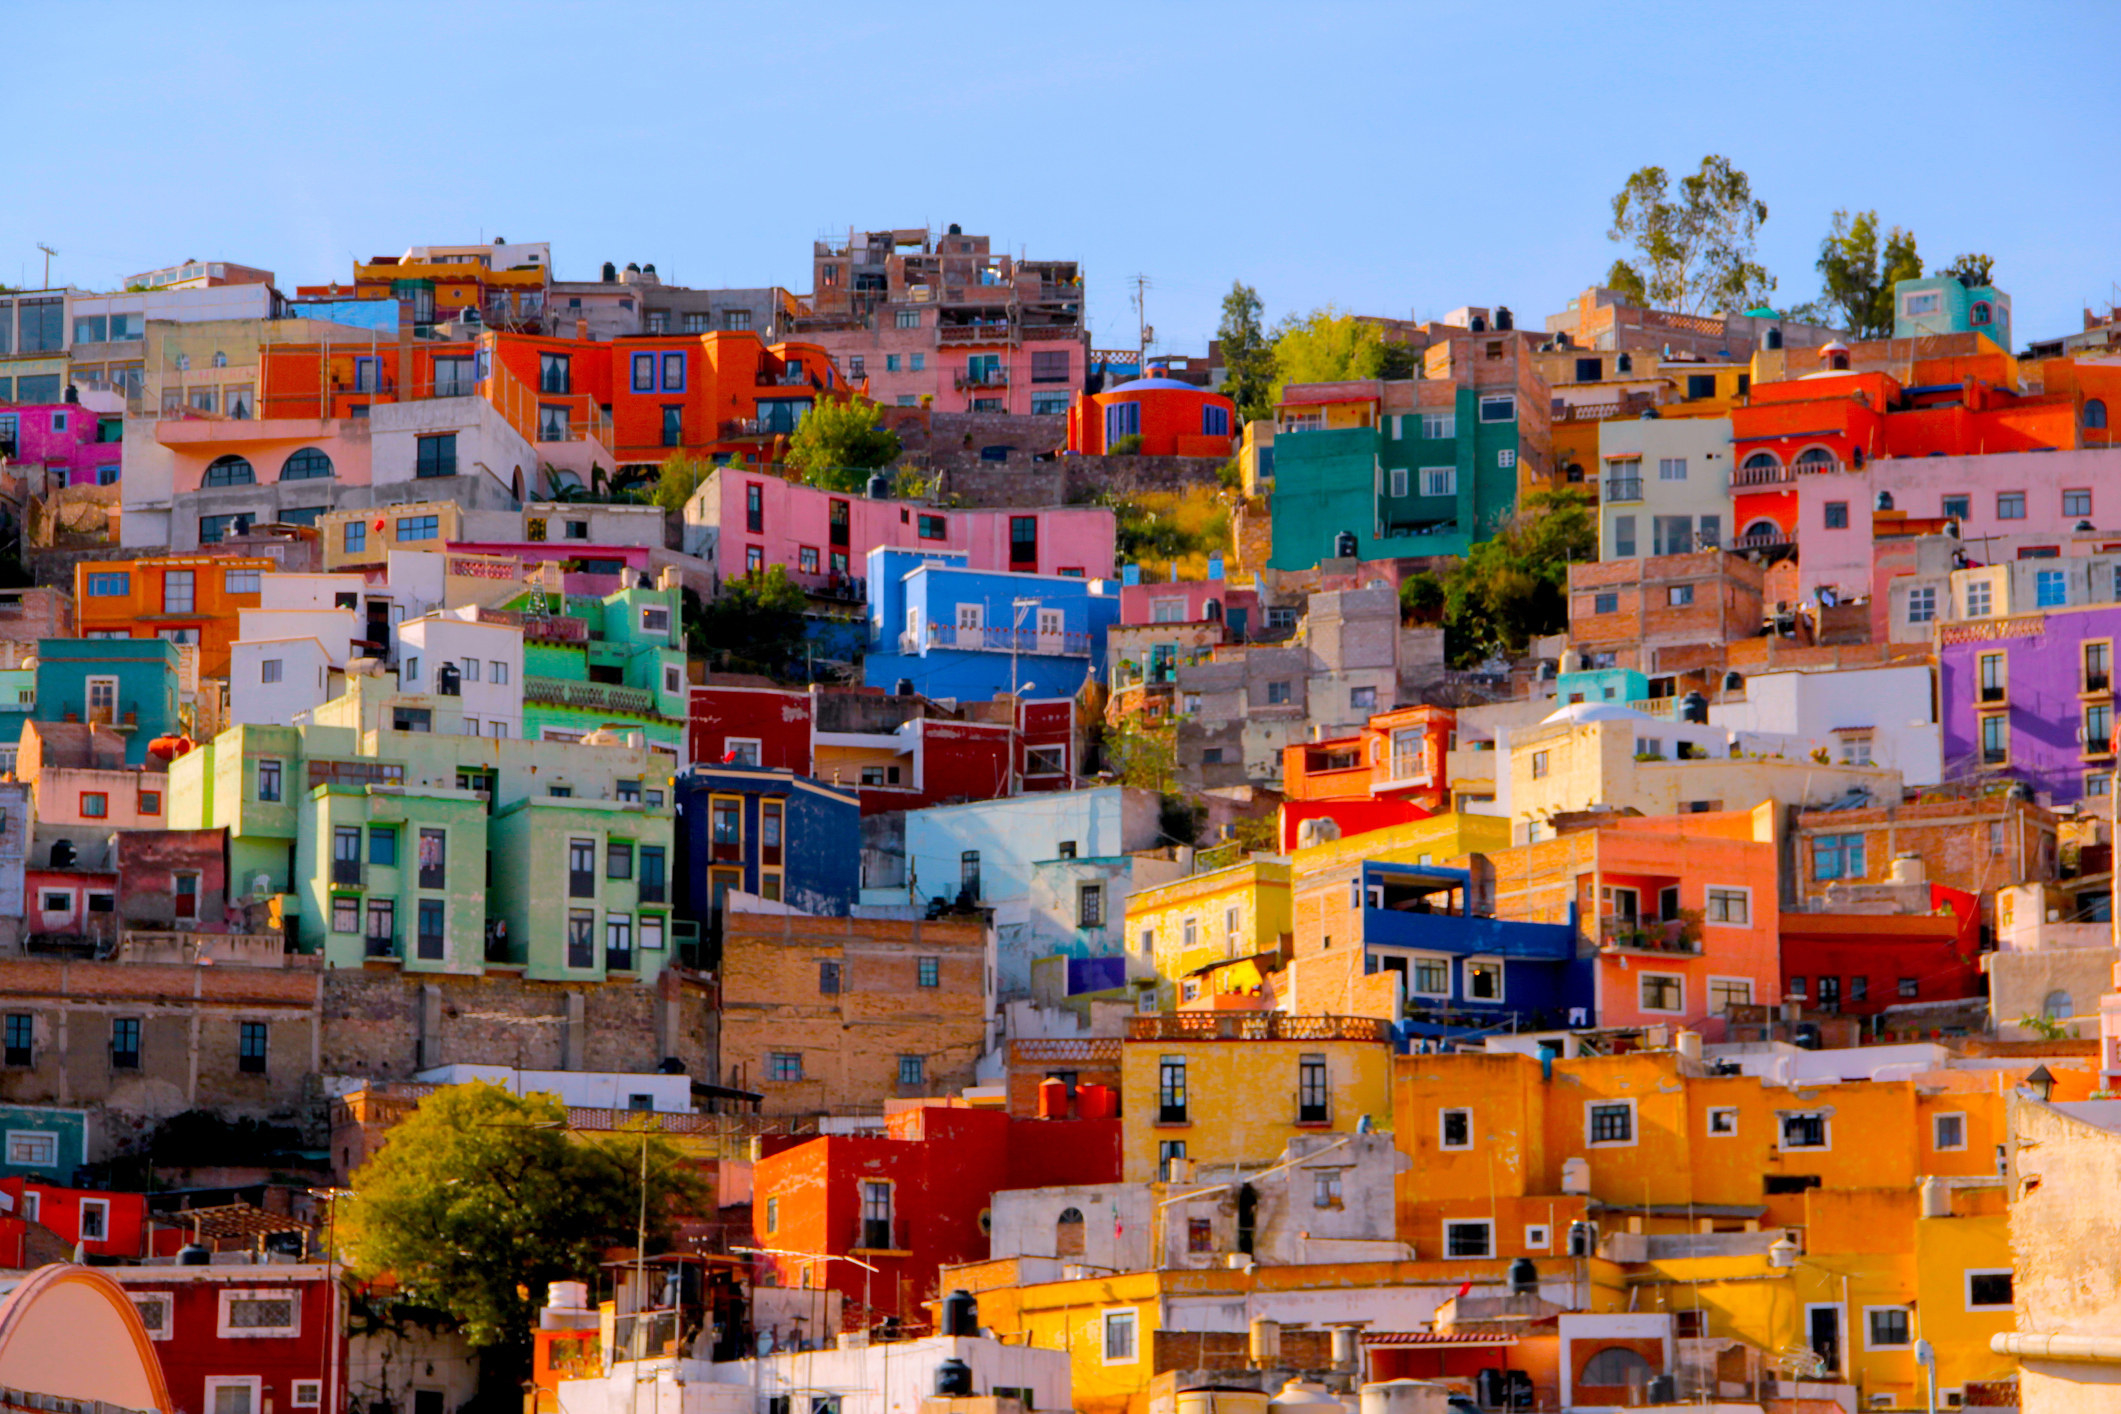 Colorful houses in Guanajuato, Mexico.